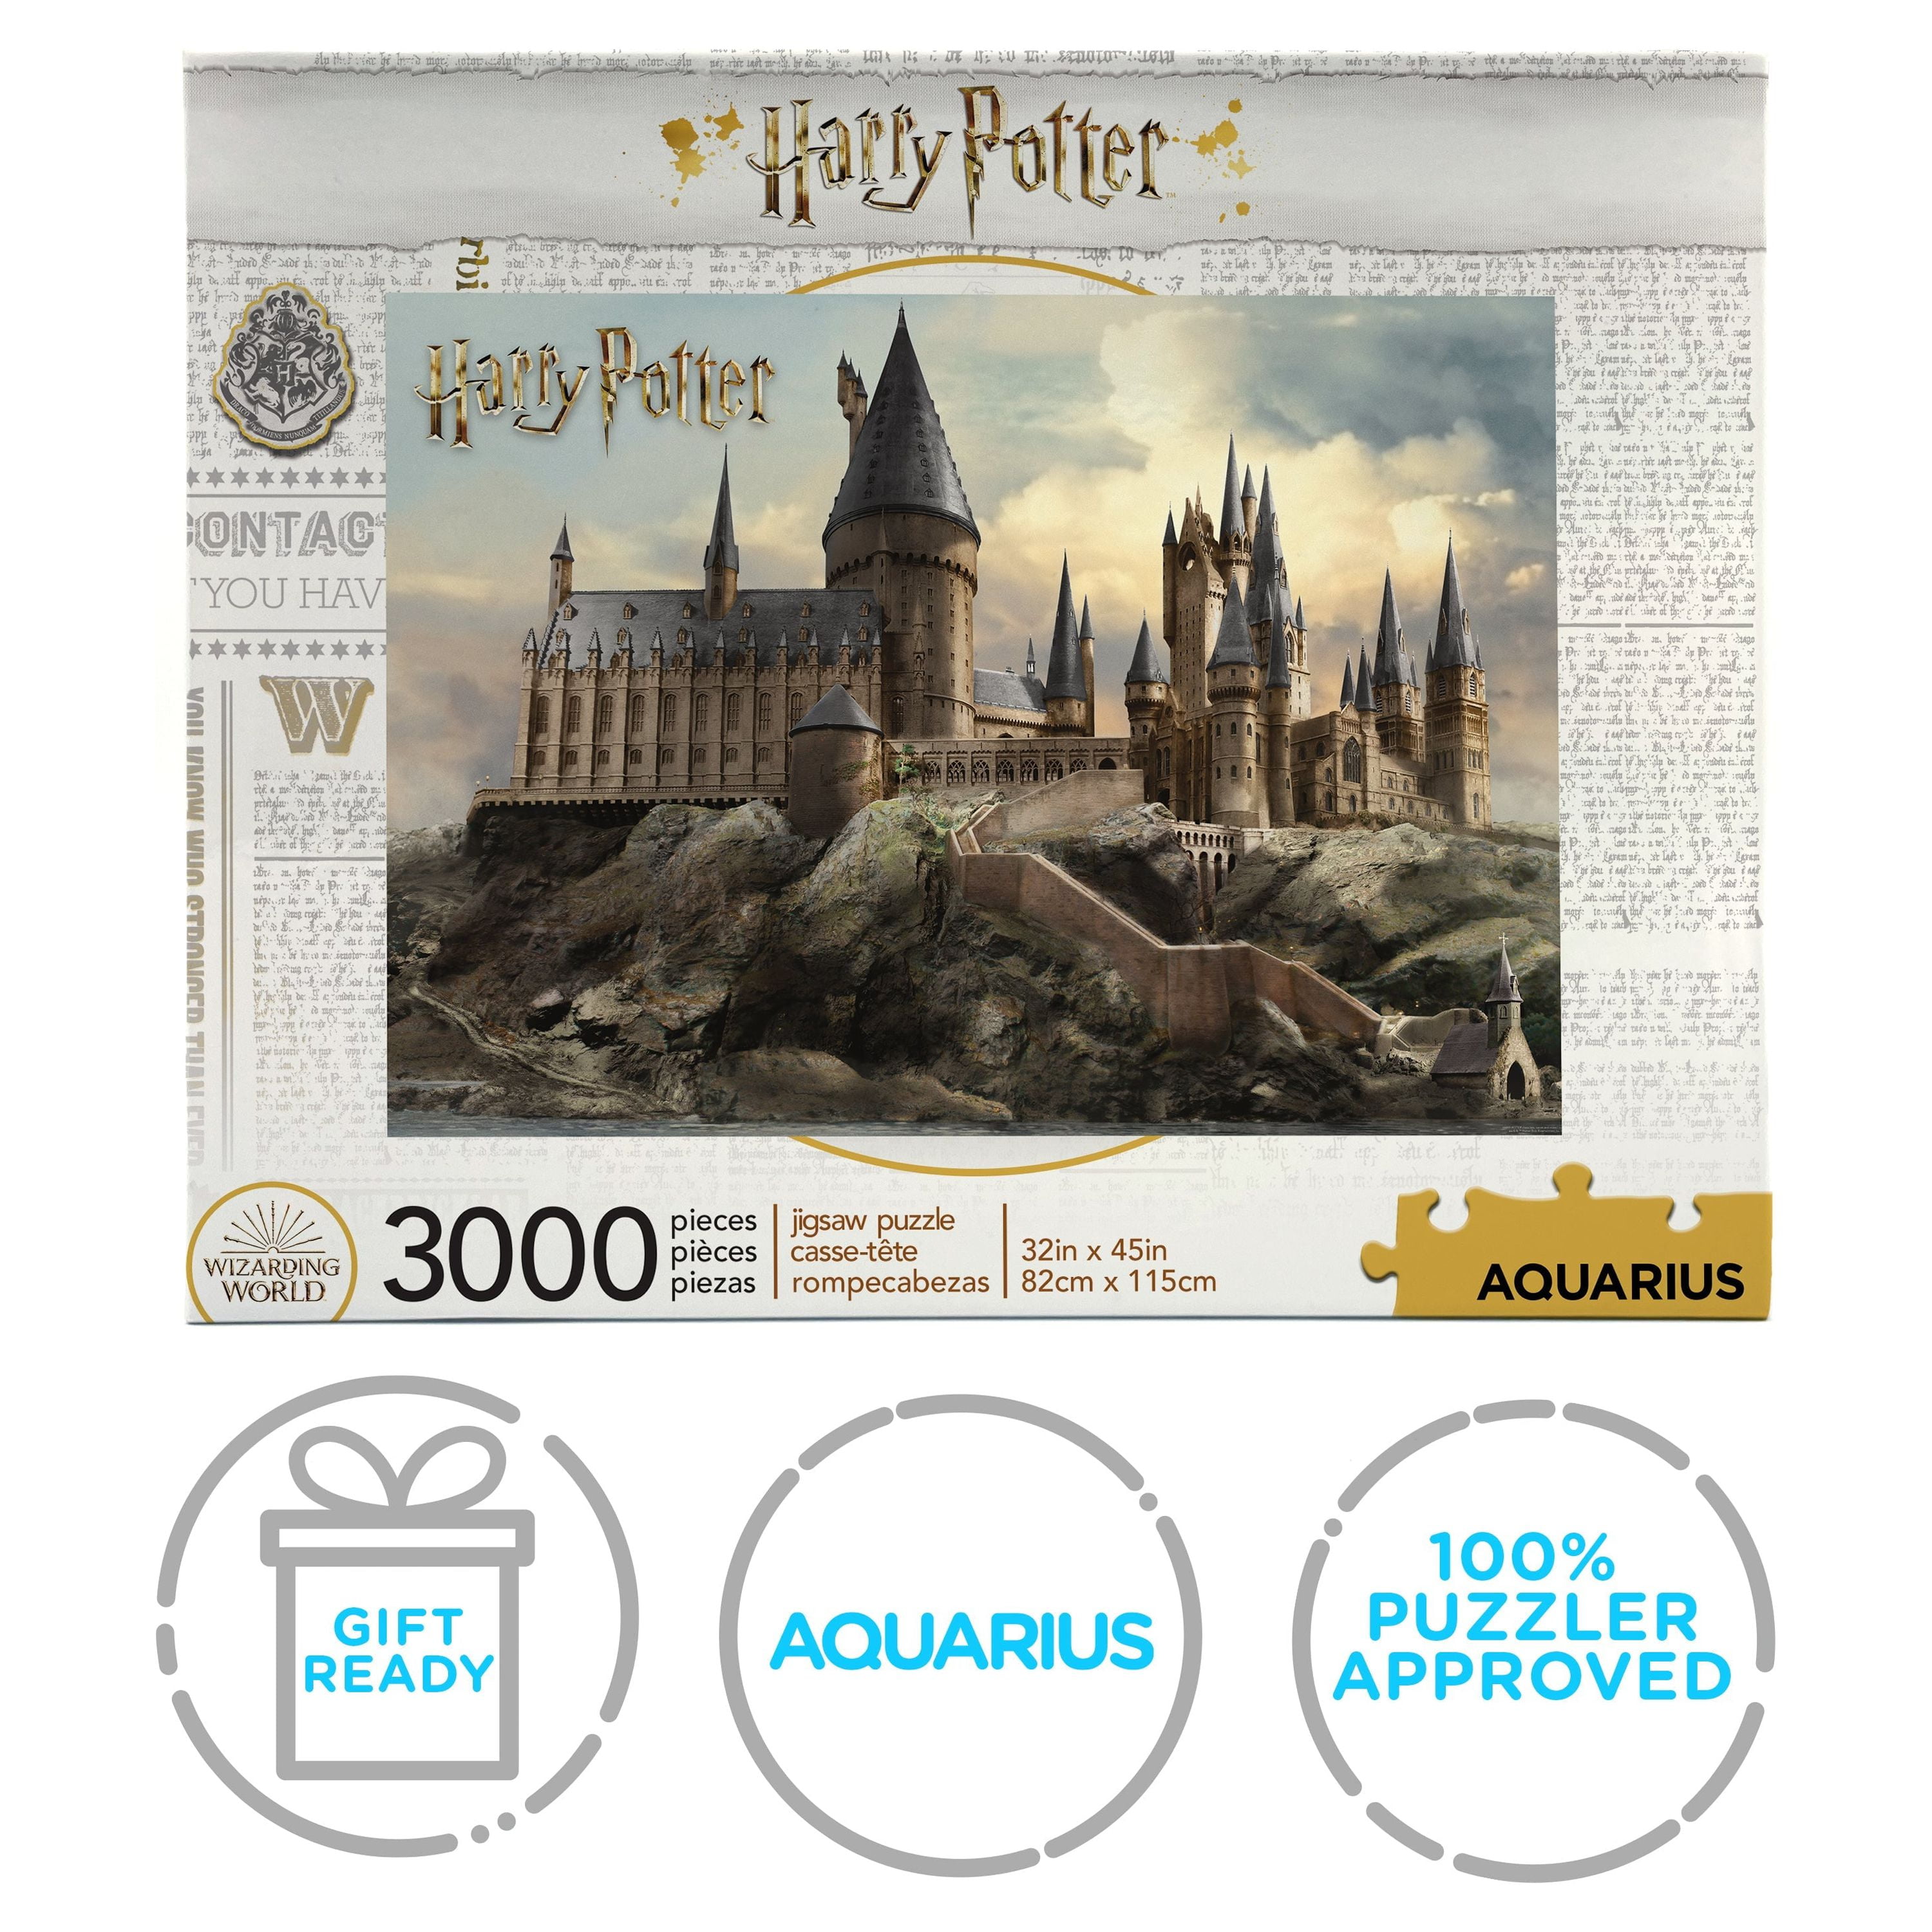 AQUARIUS HARRY POTTER Hogwarts Puzzle - 3000 Piece $35.00 - PicClick